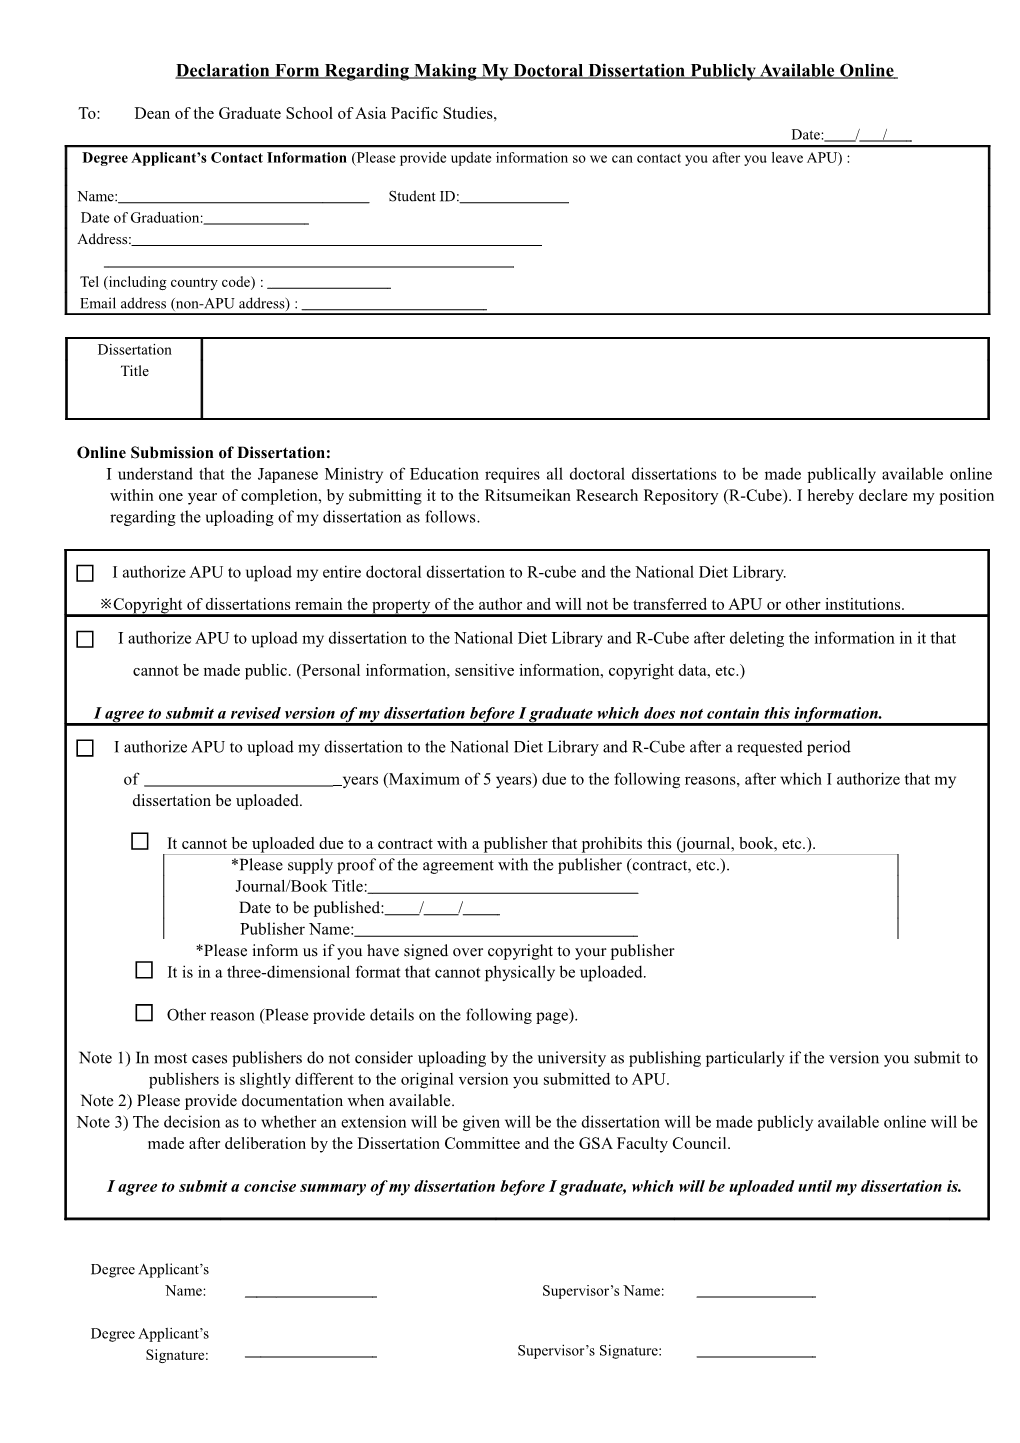 Doctoral Dissertation Online Publication Consent Form